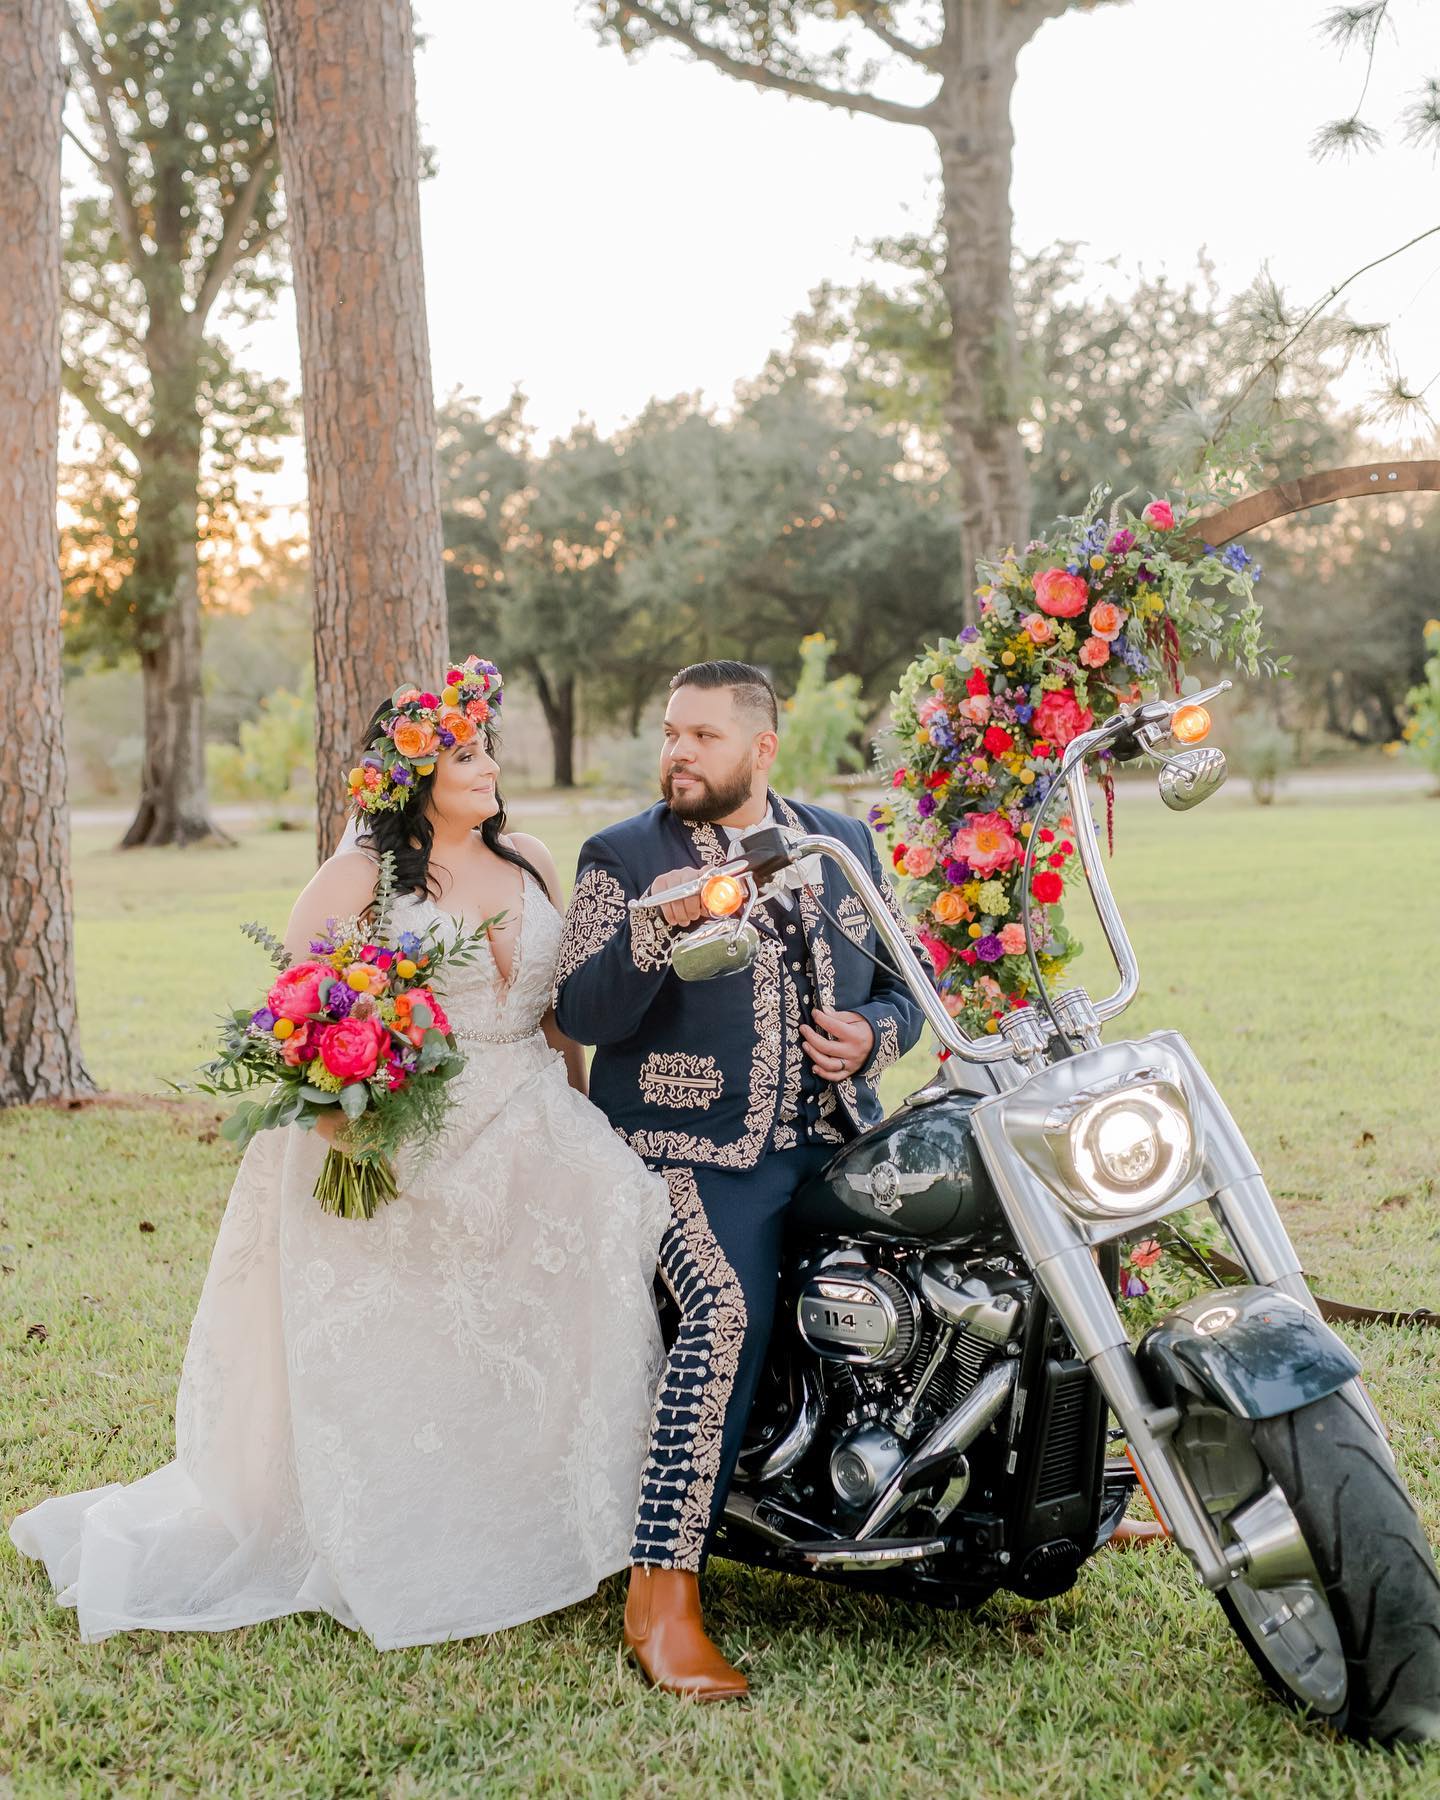 Lesley's Flowers-BridalBuzz-San Antonio Weddings- Strawberry Pines - Under the Sun Photography